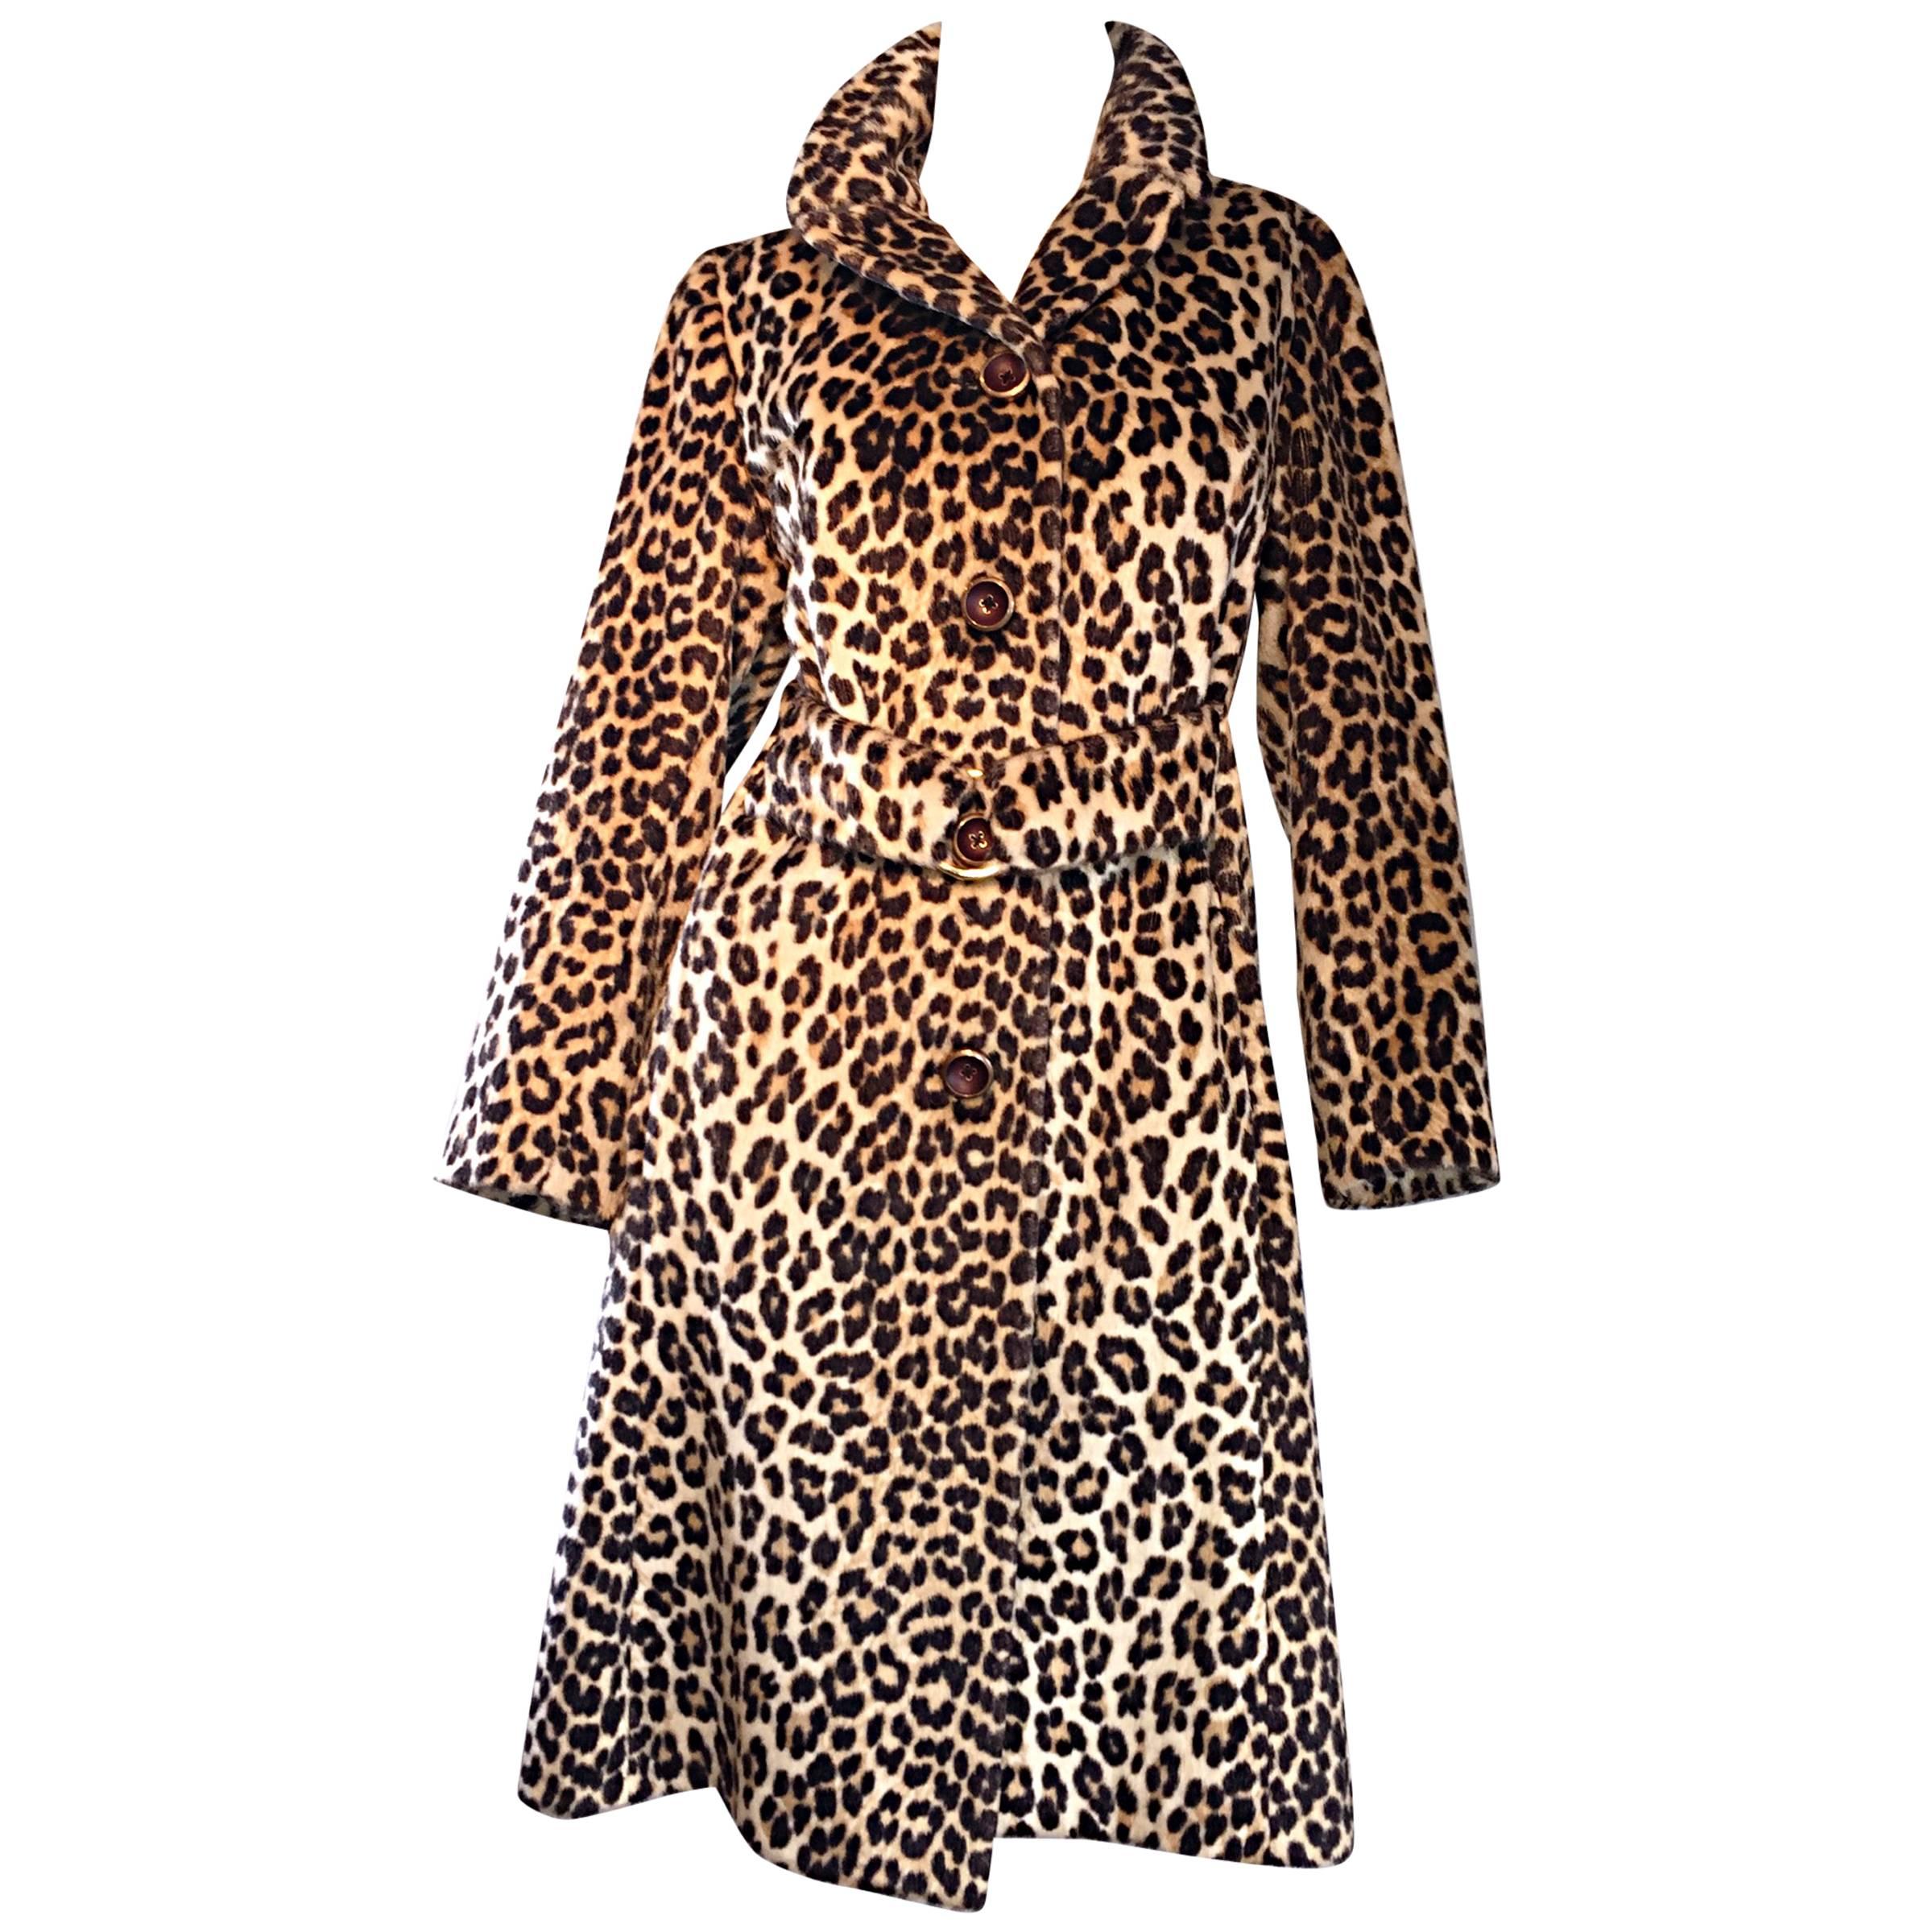 Rare 1960s Jean Patou by Karl Lagerfeld Faux Fur Leopard Vintage Swing Jacket